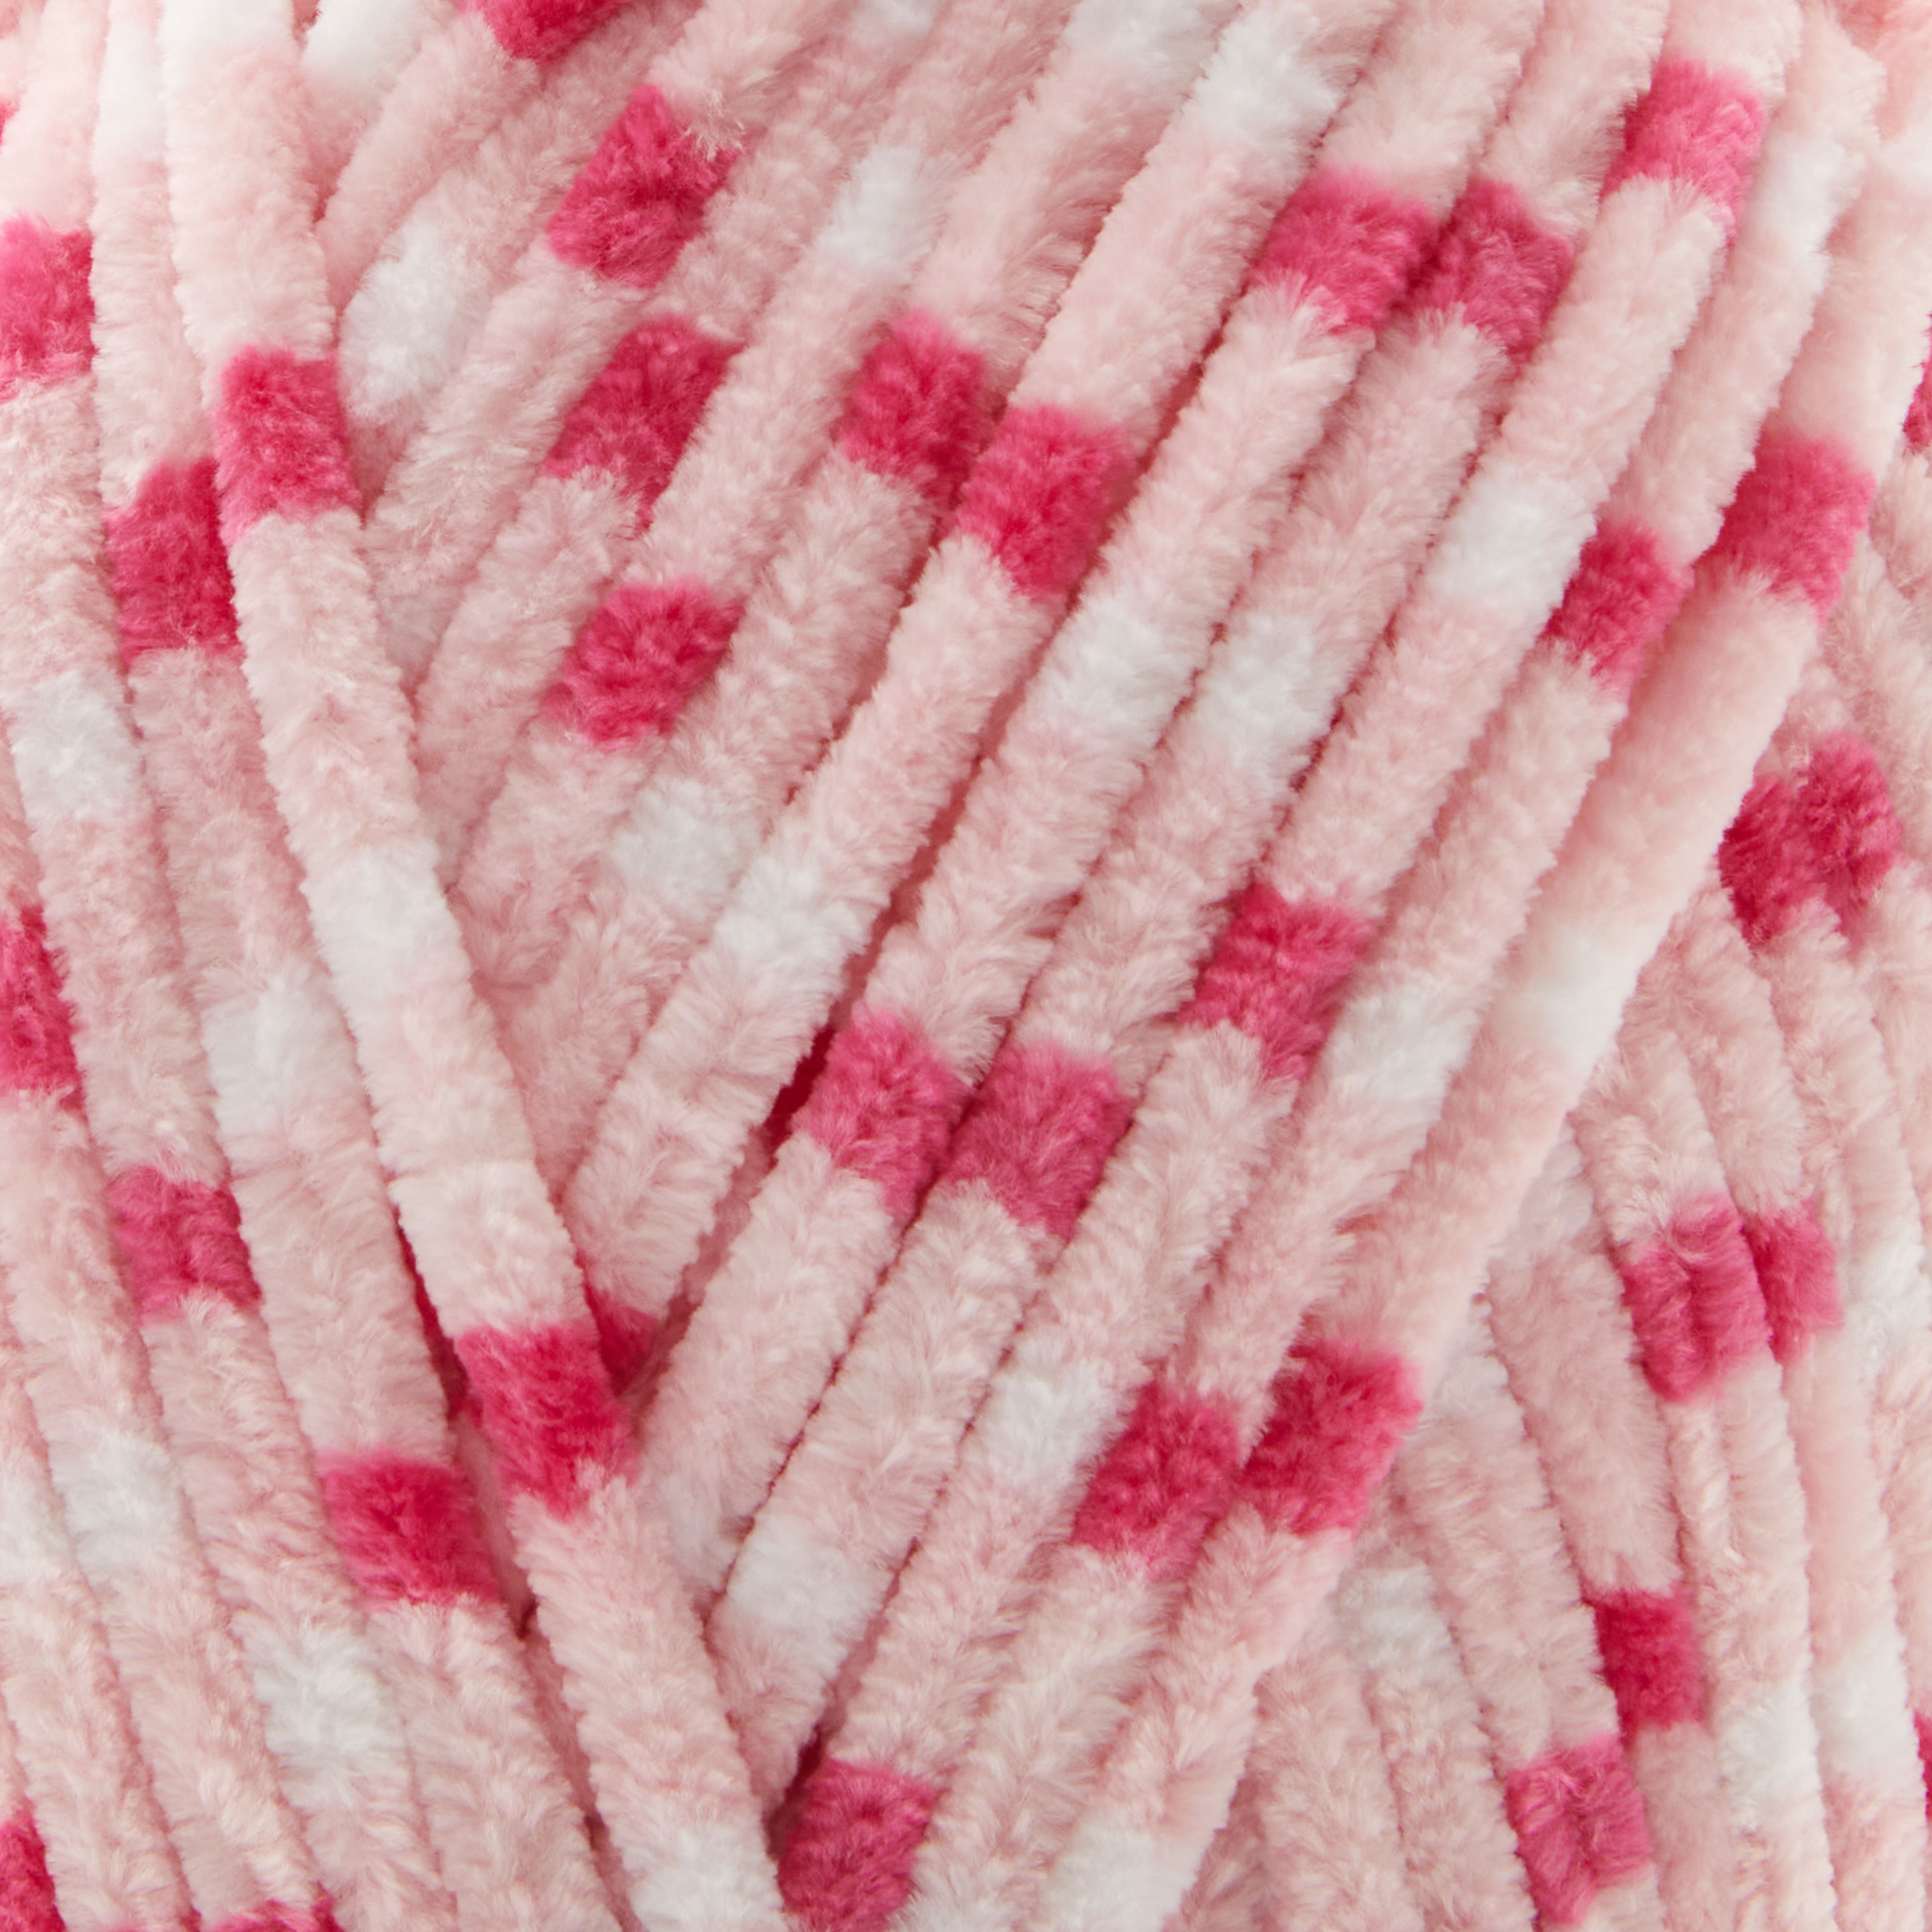 Sweet Snuggles™ Yarn by Loops & Threads® | Michaels